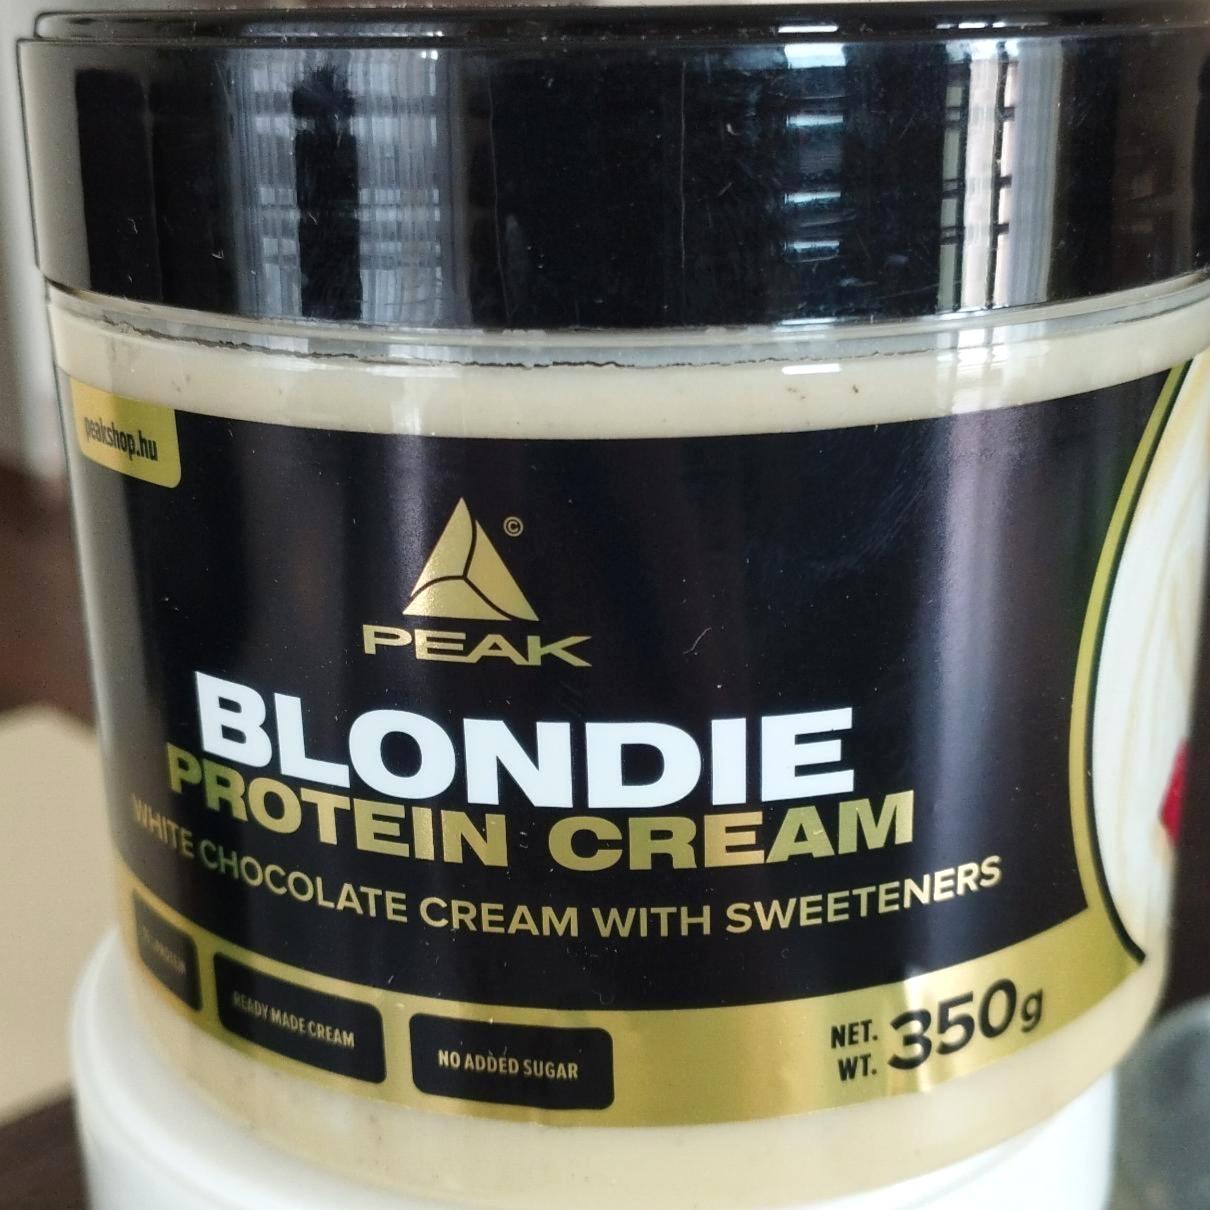 Képek - Blondie protein cream Peak